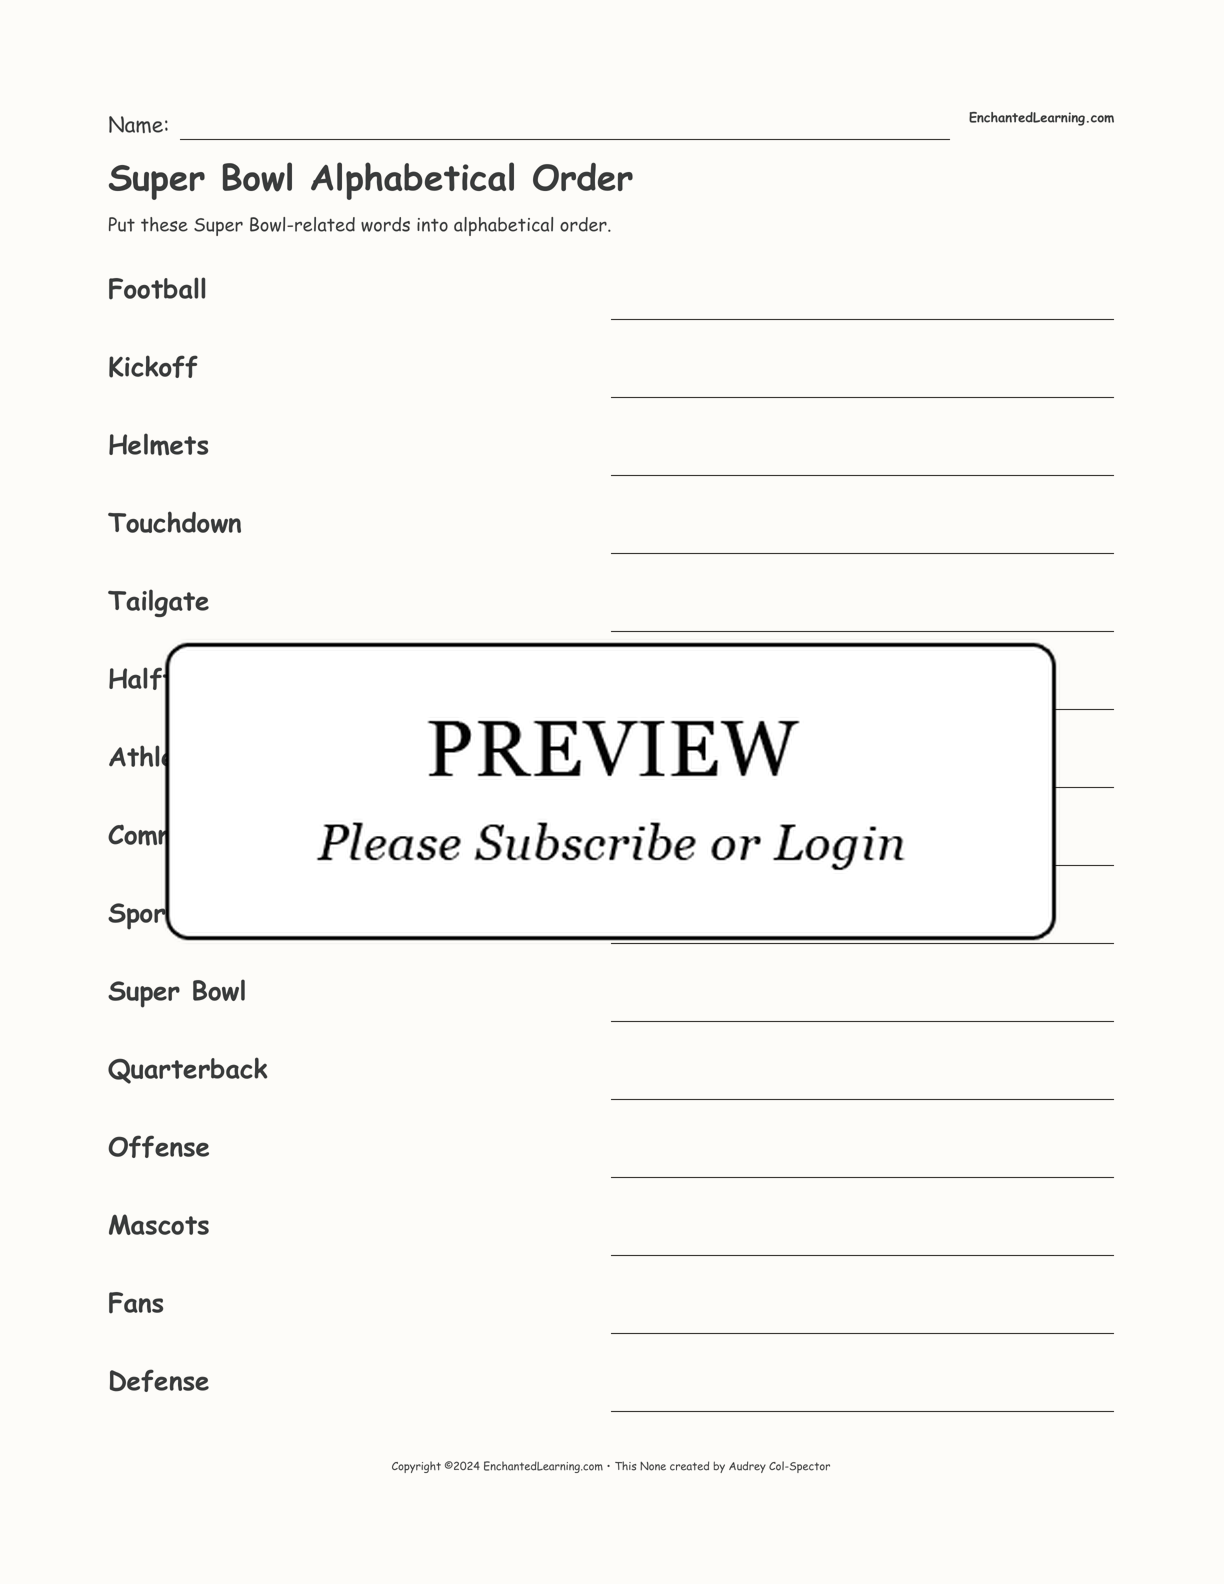 Super Bowl Alphabetical Order interactive worksheet page 1